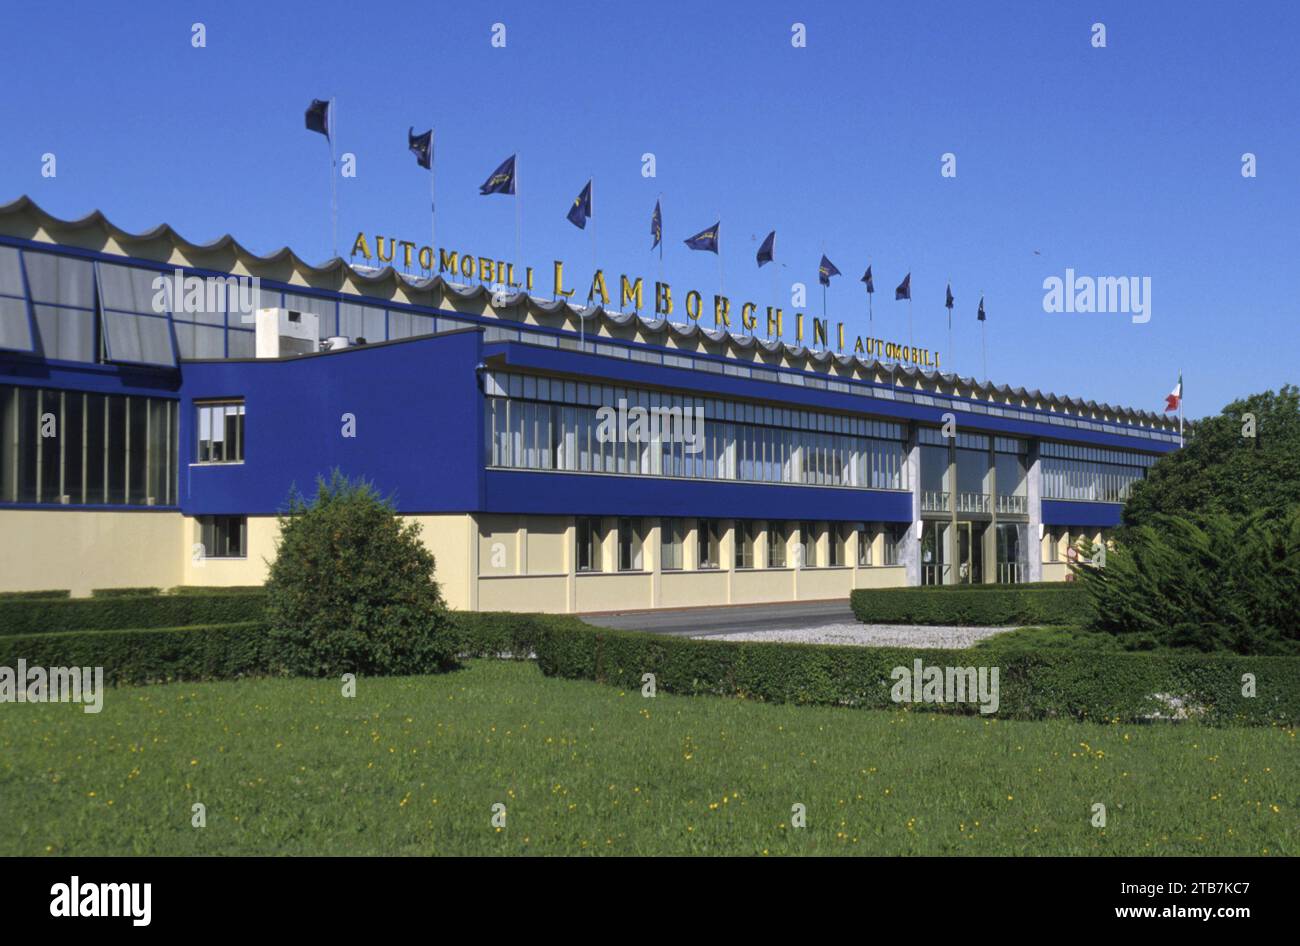 Italy, Sant’Agata Bolognese: facade of the Automobili Lamborghini plant in the 70s Stock Photo